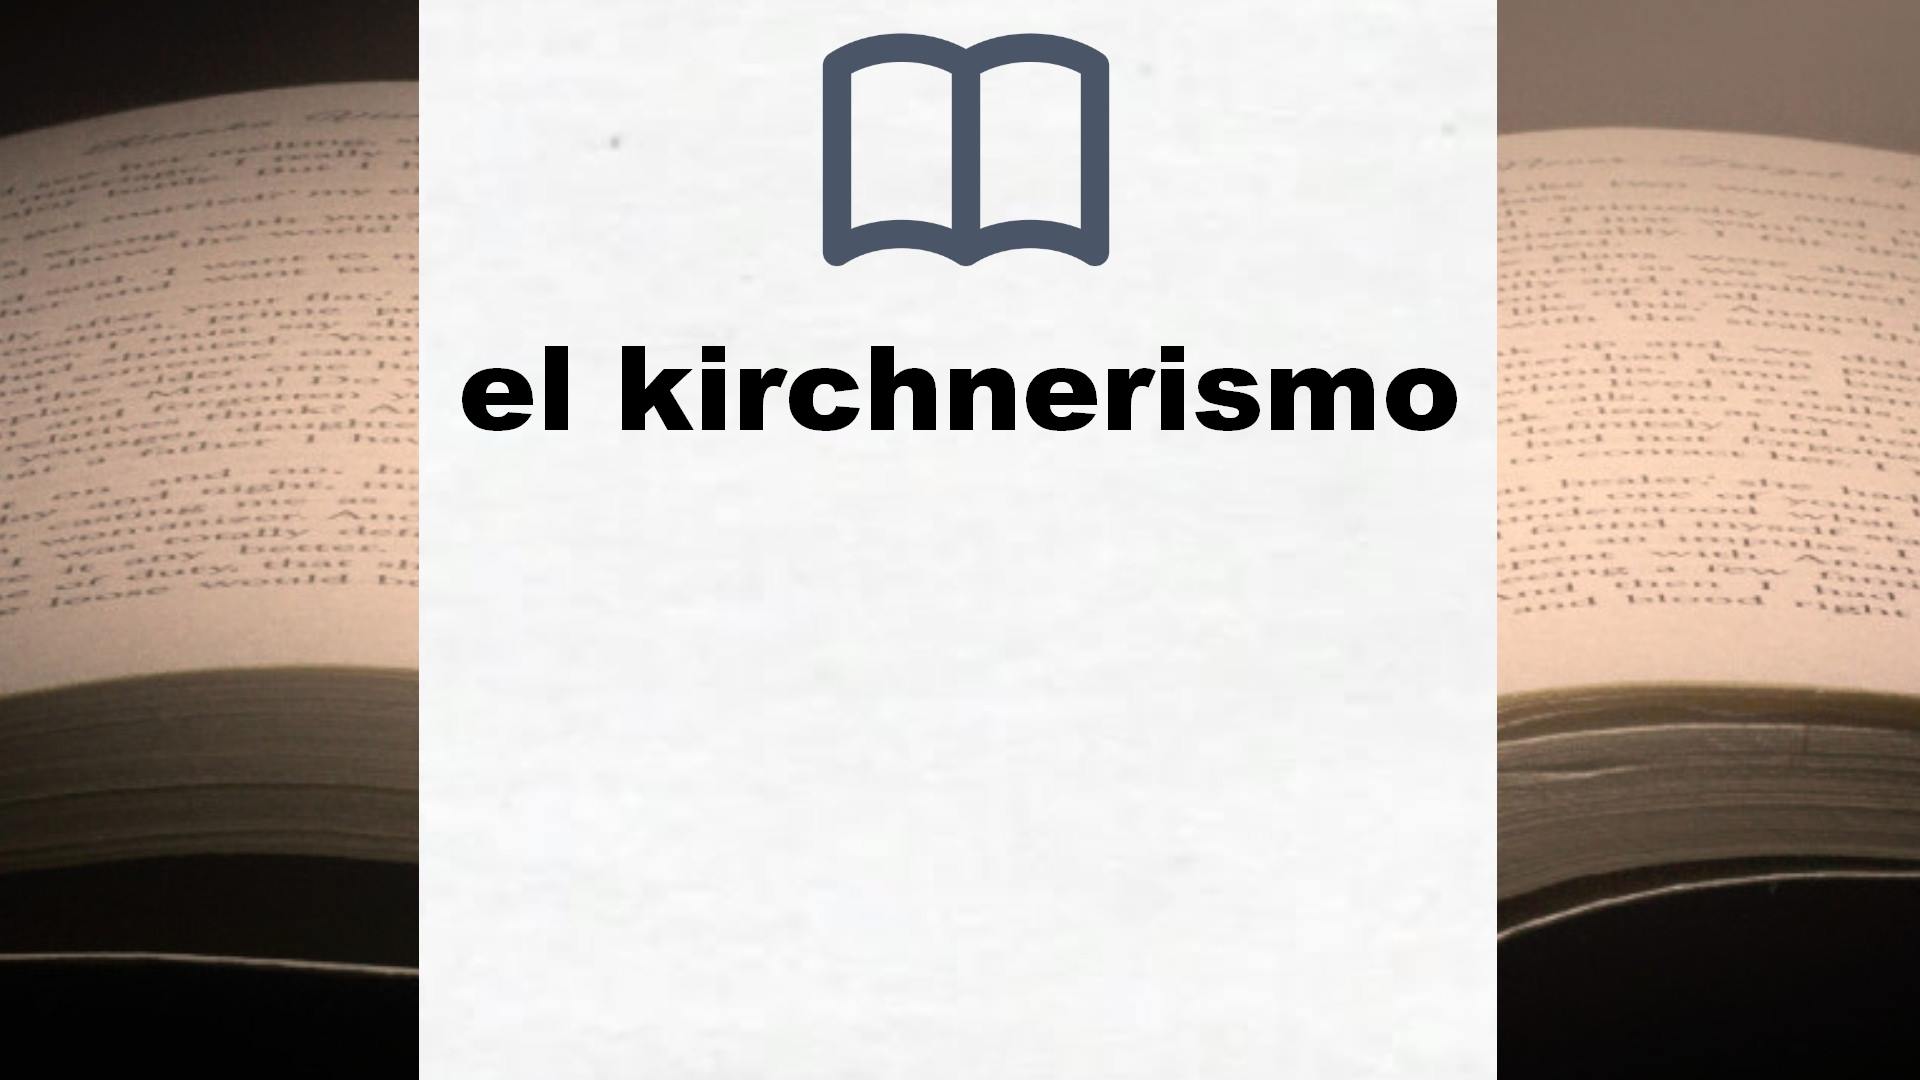 Libros sobre el kirchnerismo